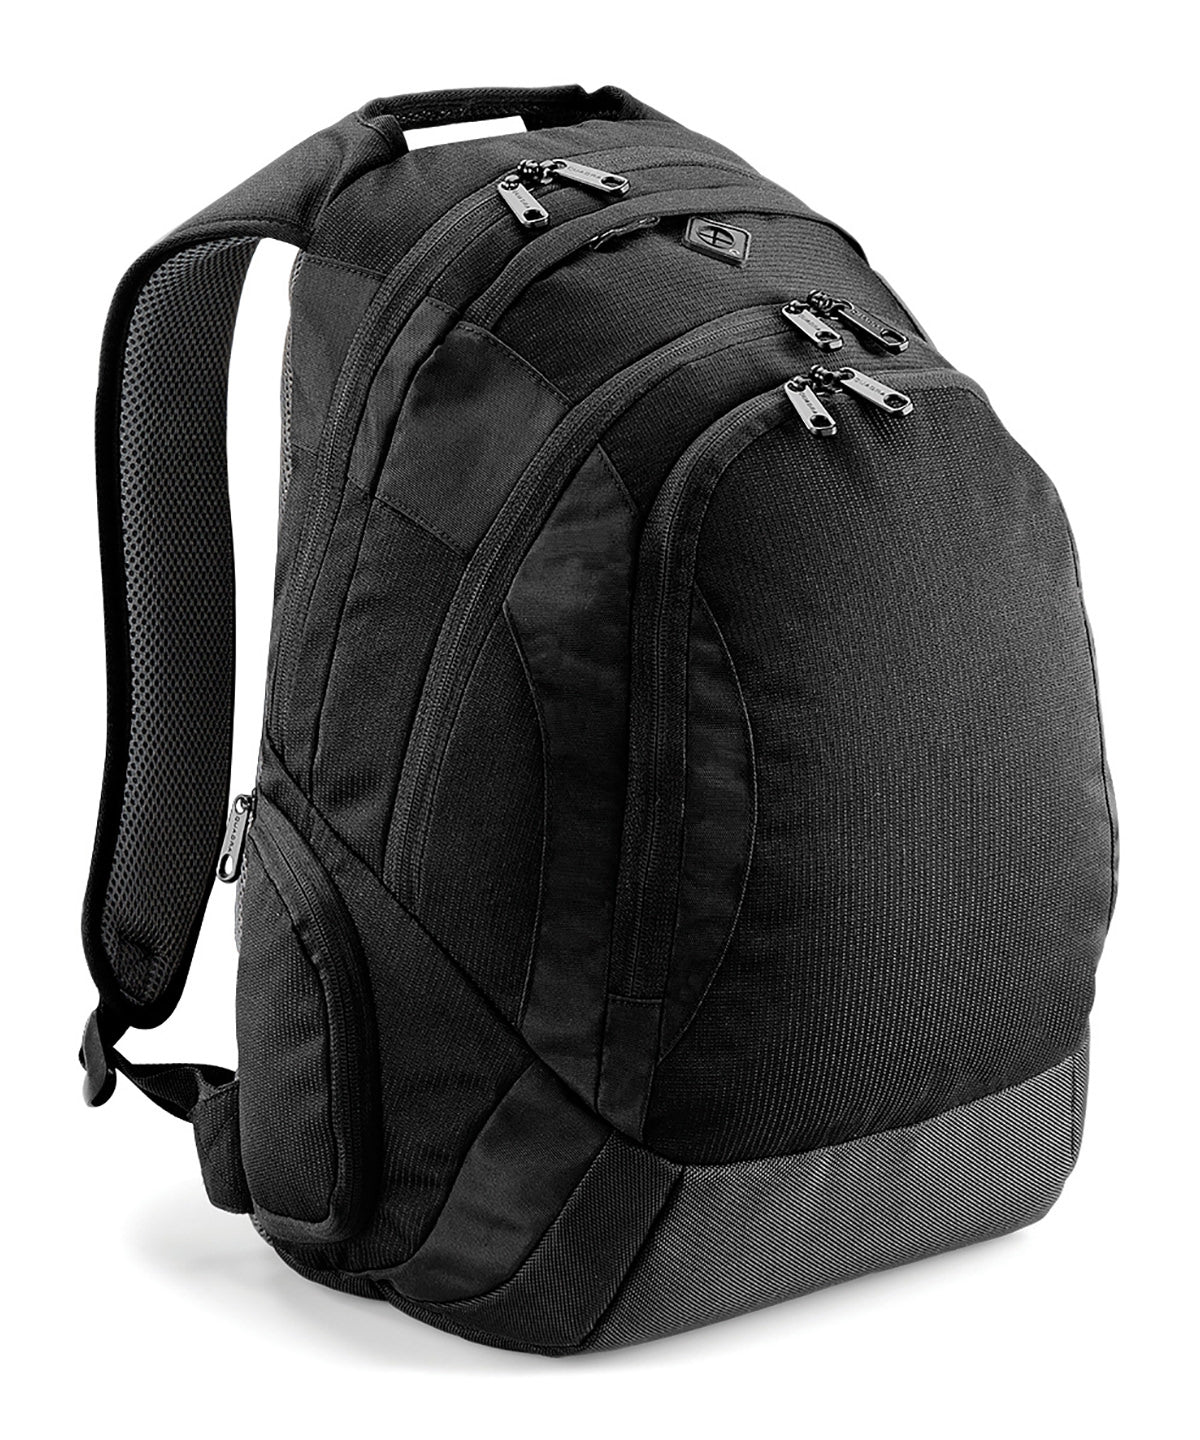 Töskur - Vessel™ Laptop Backpack